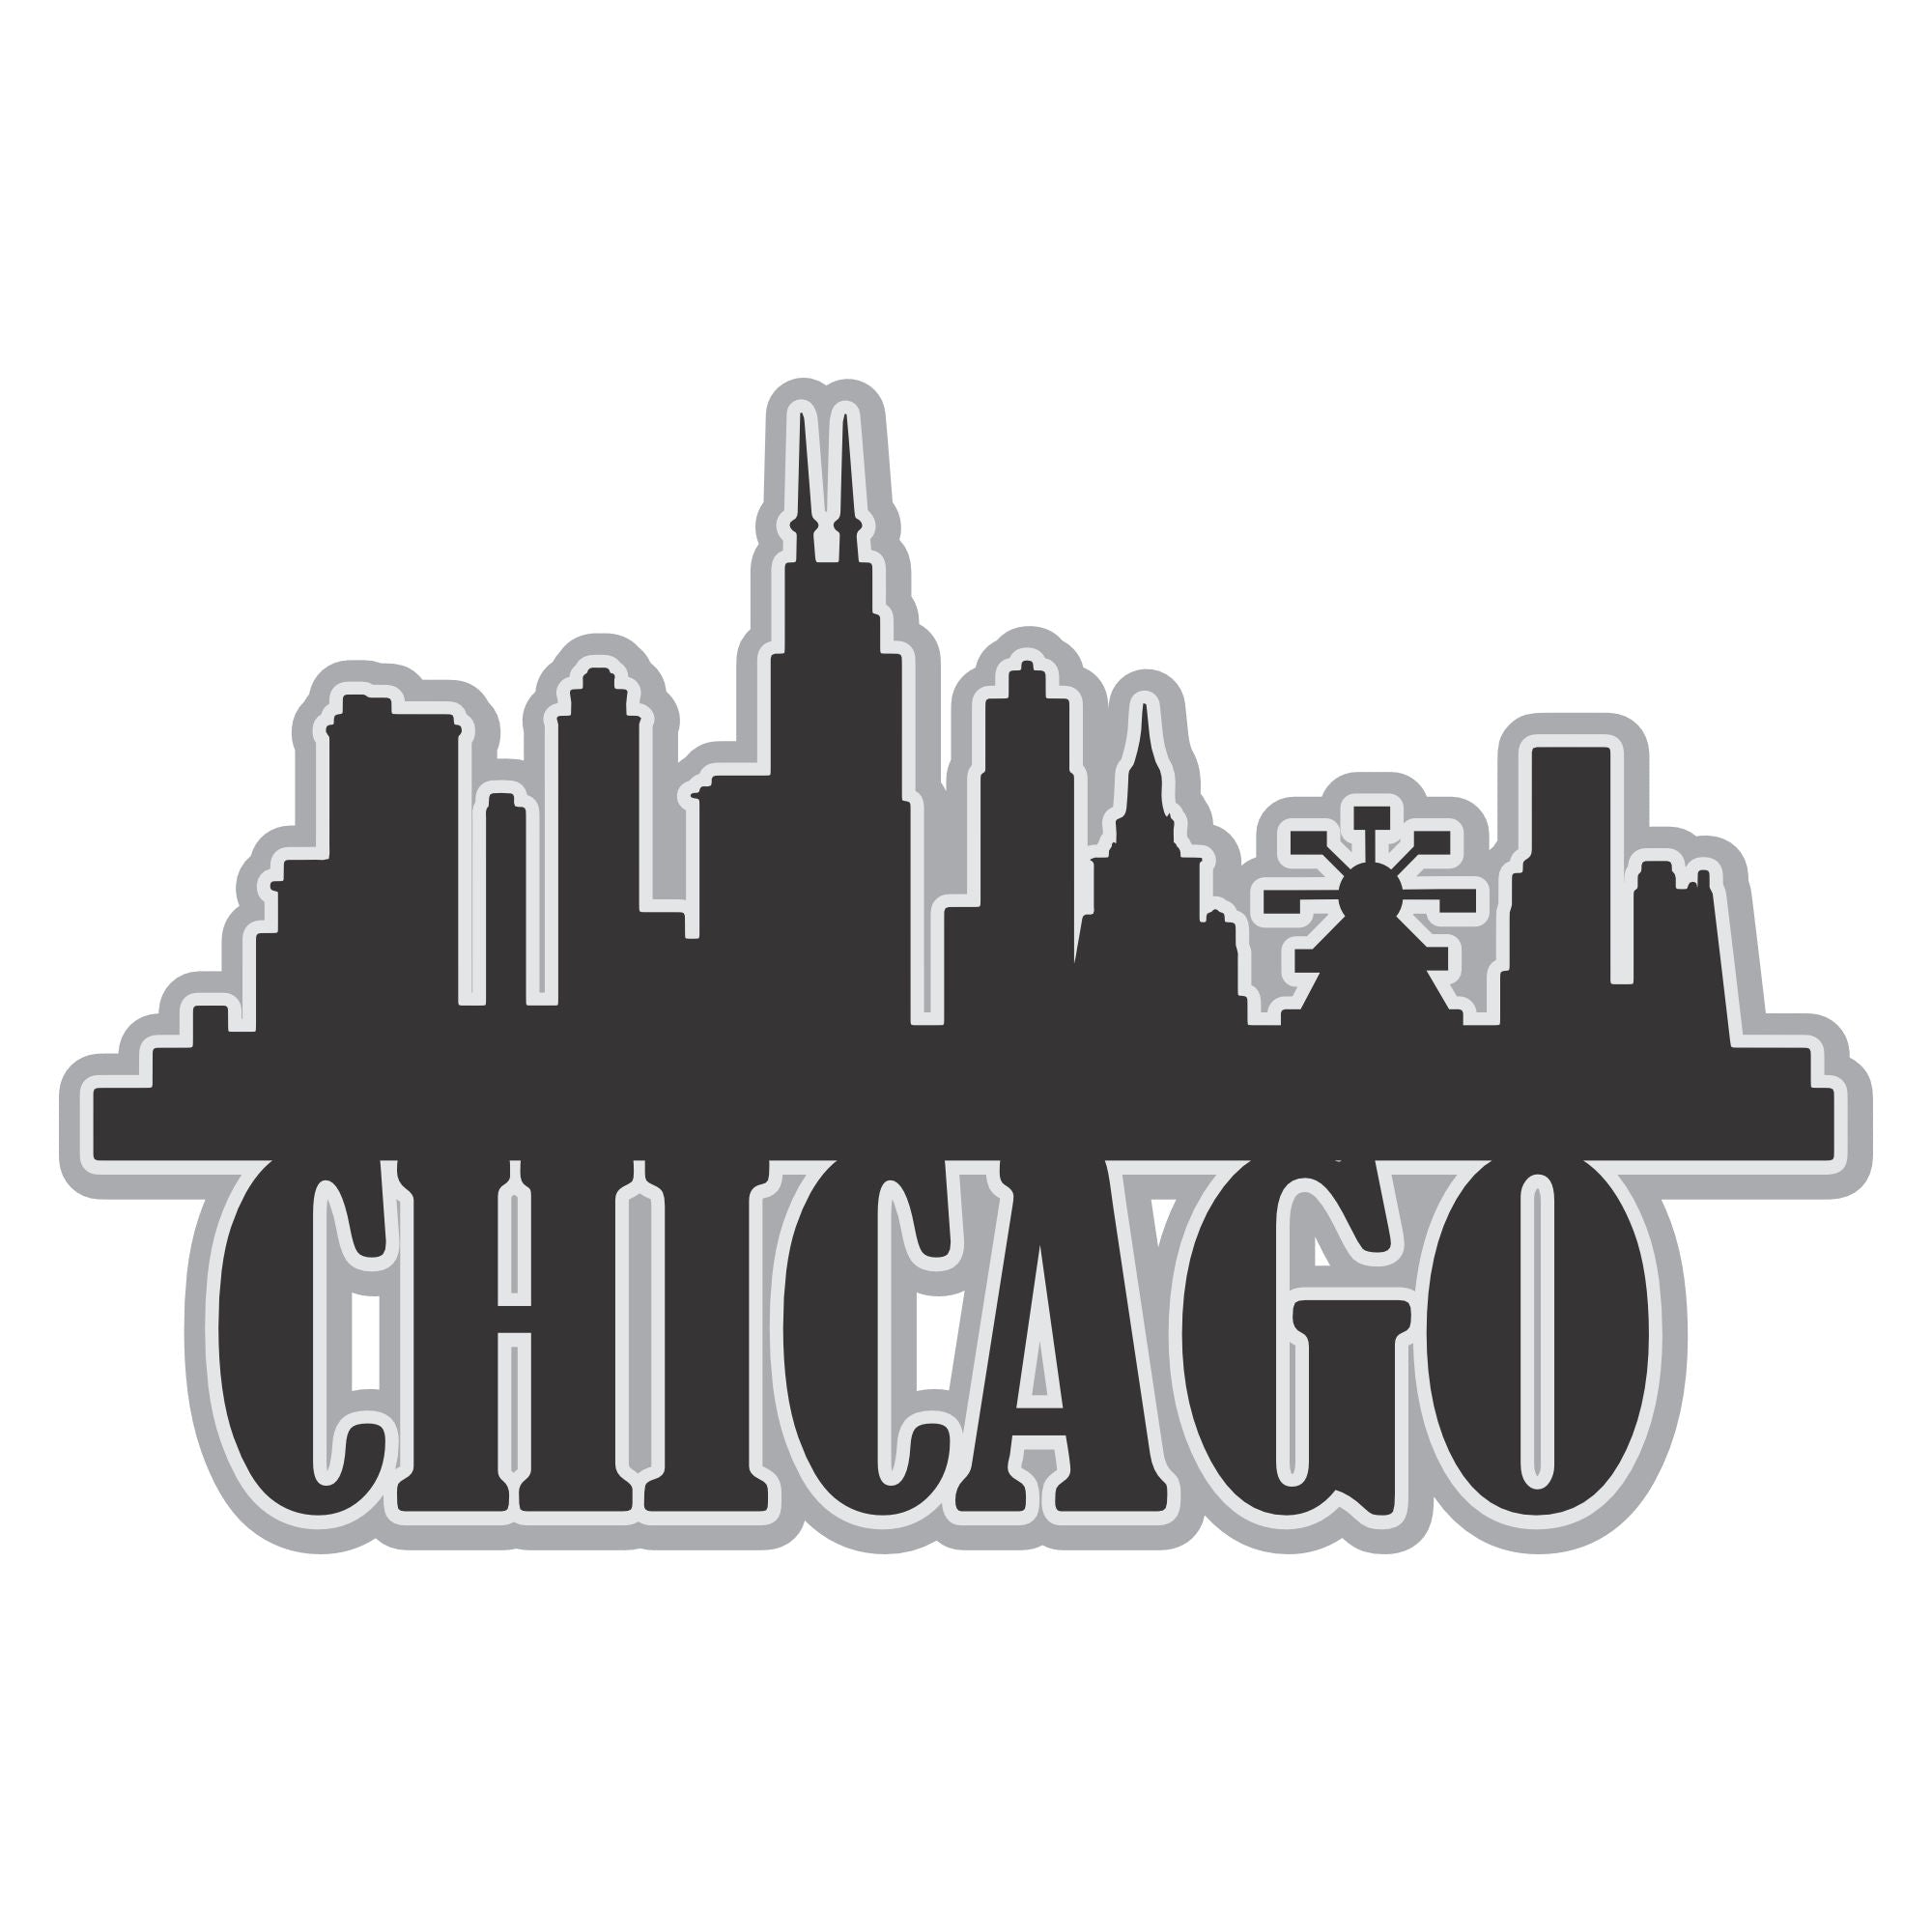 Chicago Skyline 6 x 5 Fully-Assembled Laser Cut Scrapbook Embellishment by SSC Laser Designs